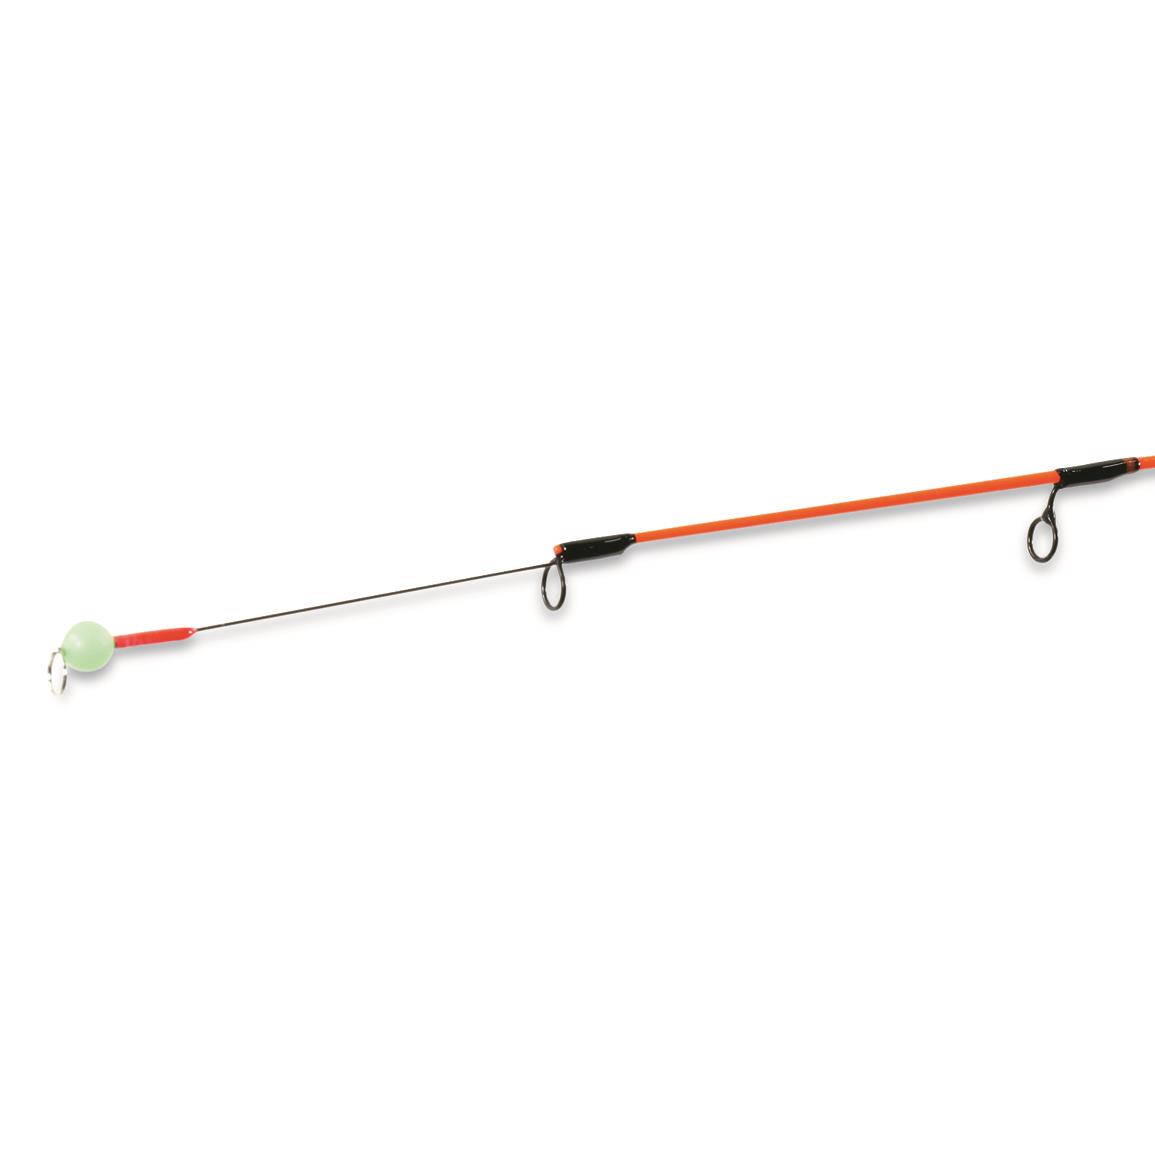 St. Croix Skandic Ice Fishing Spinning Rod, 24, Medium Power - 728942, Ice  Fishing Rods at Sportsman's Guide